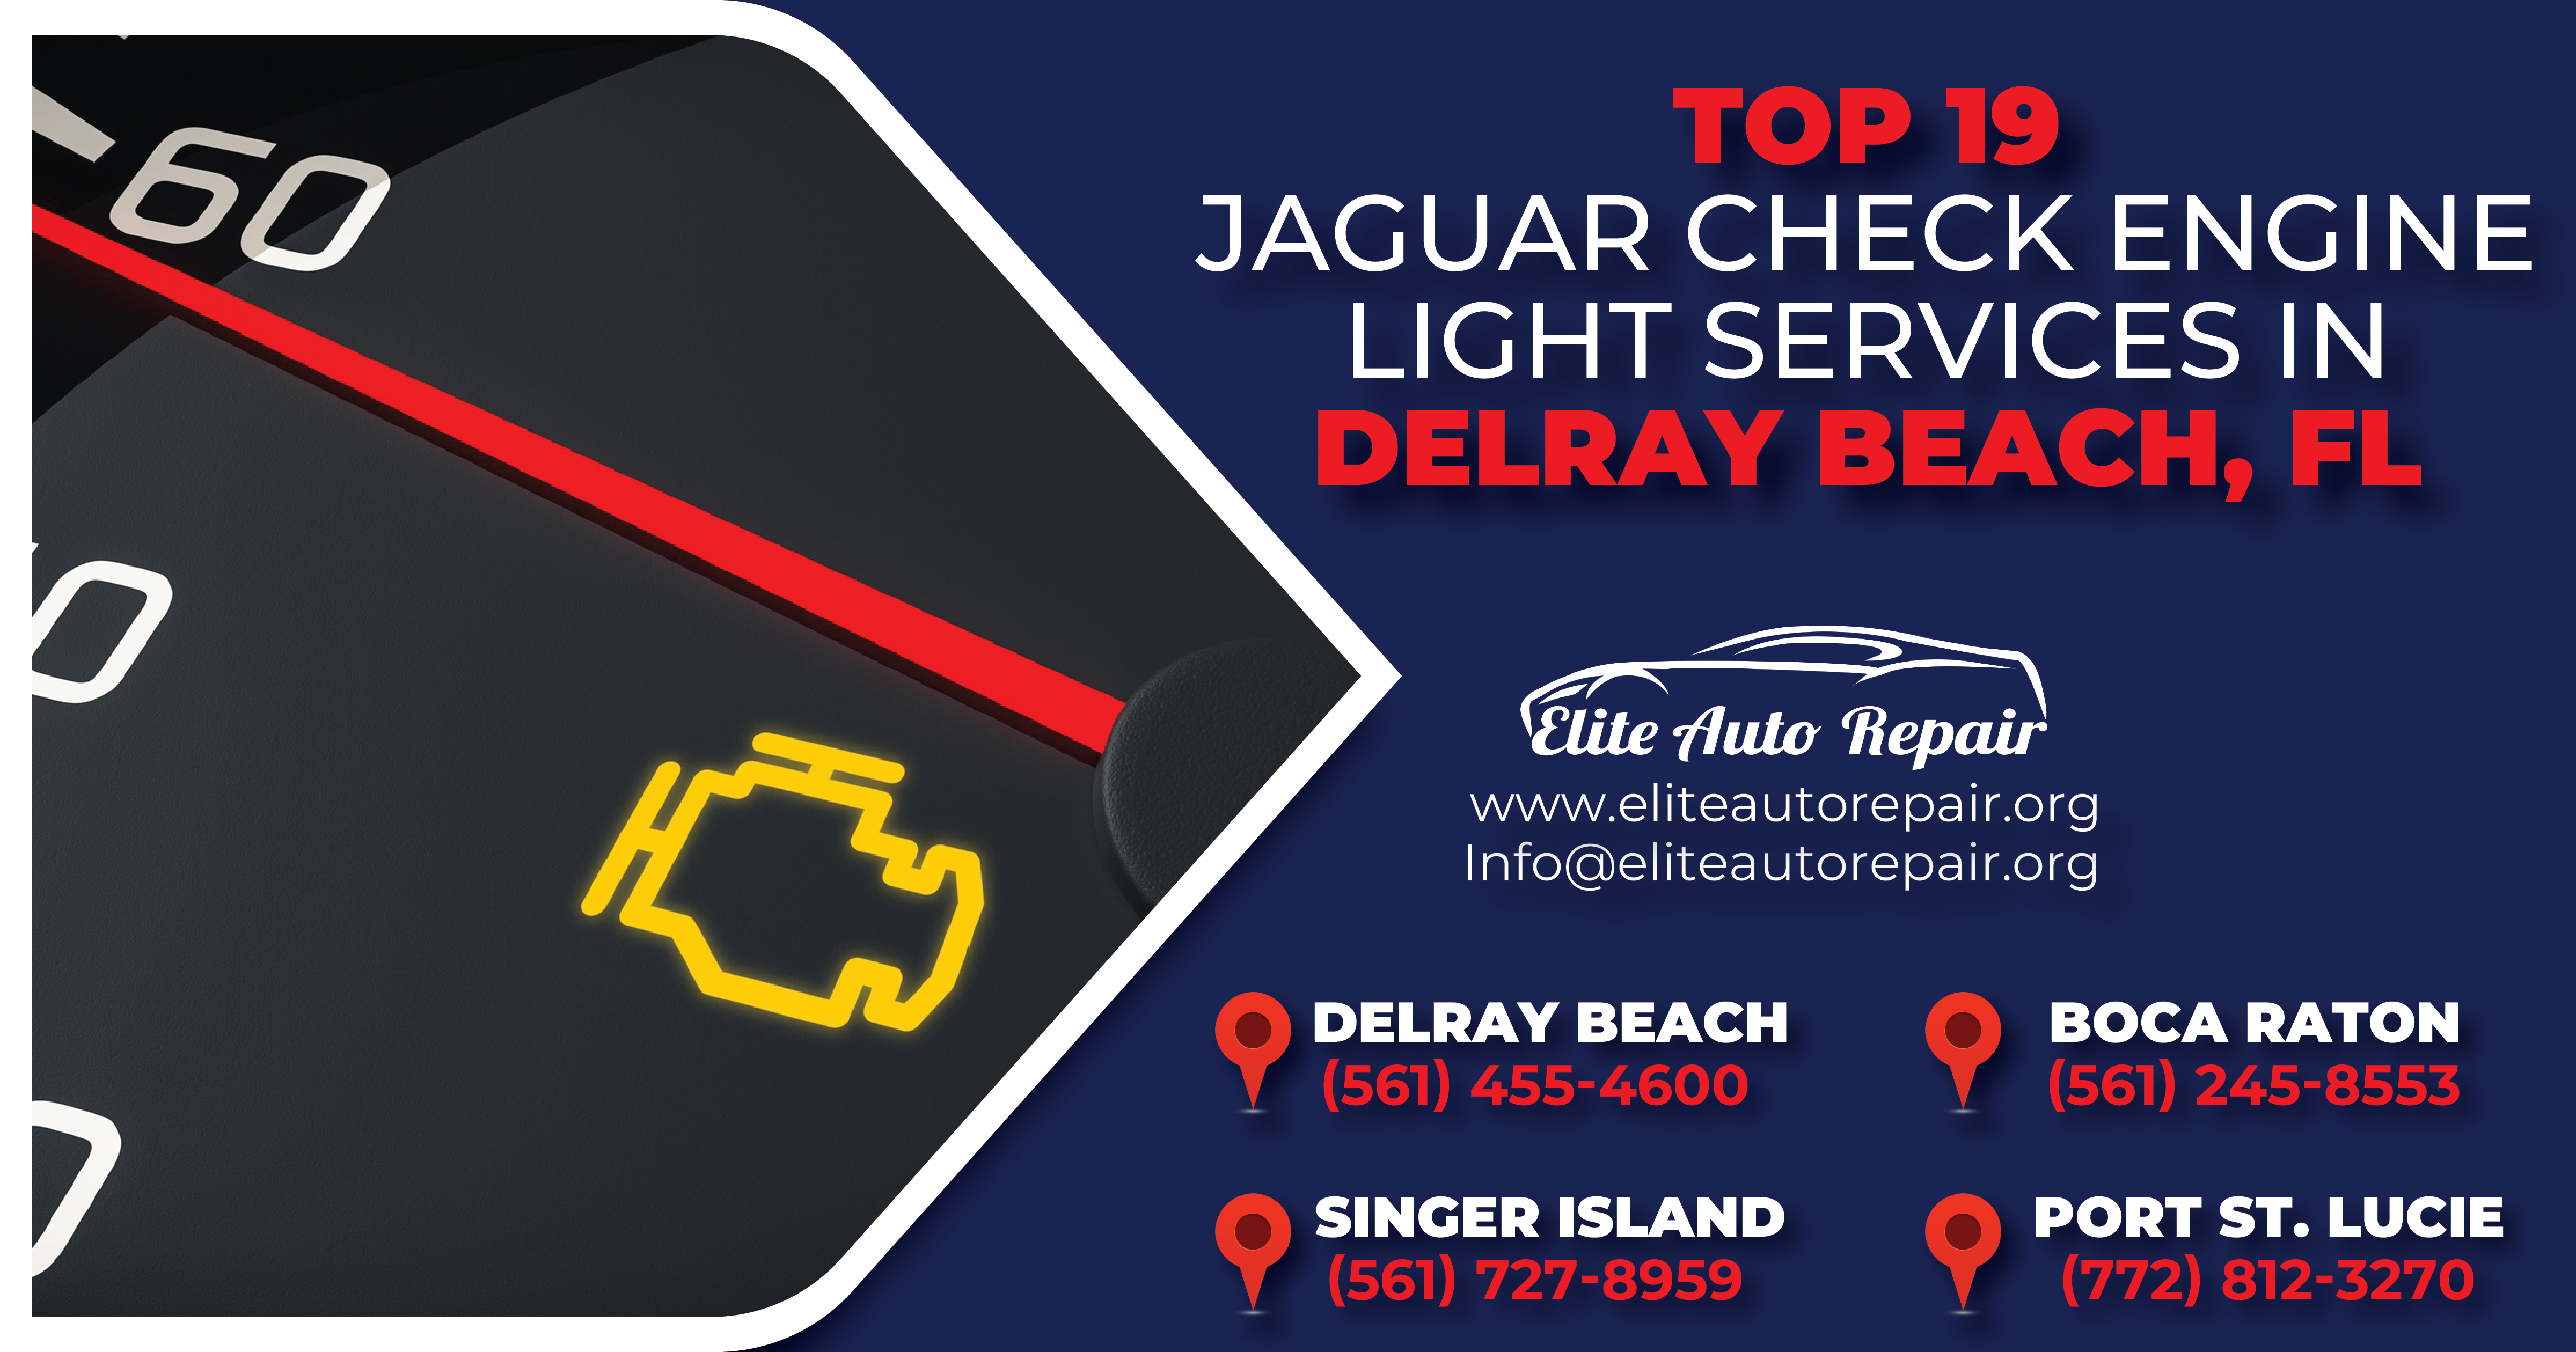 Top 19 Jaguar Check Engine Light Services in Delray Beach, FL